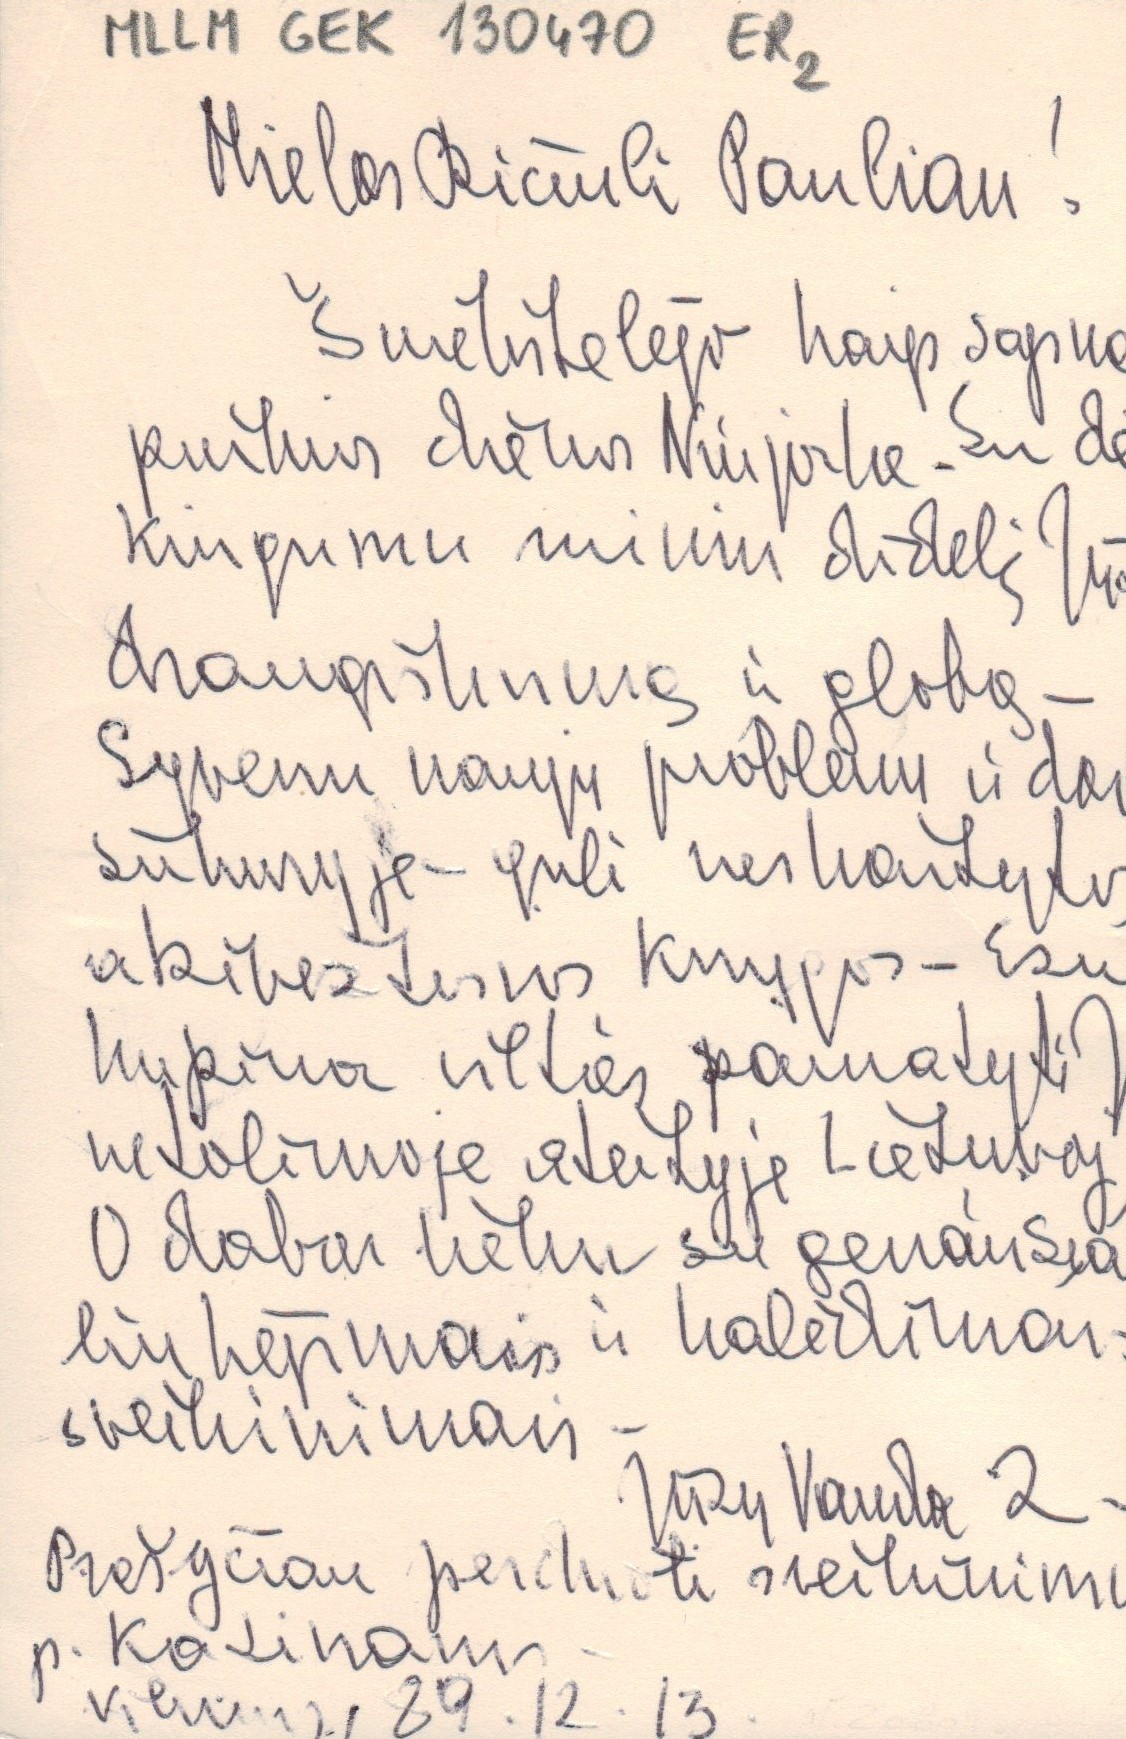 V. Zaborskaitės laiškas P. Jurkui. Vilnius. 1989.12.13. MLLM 130470